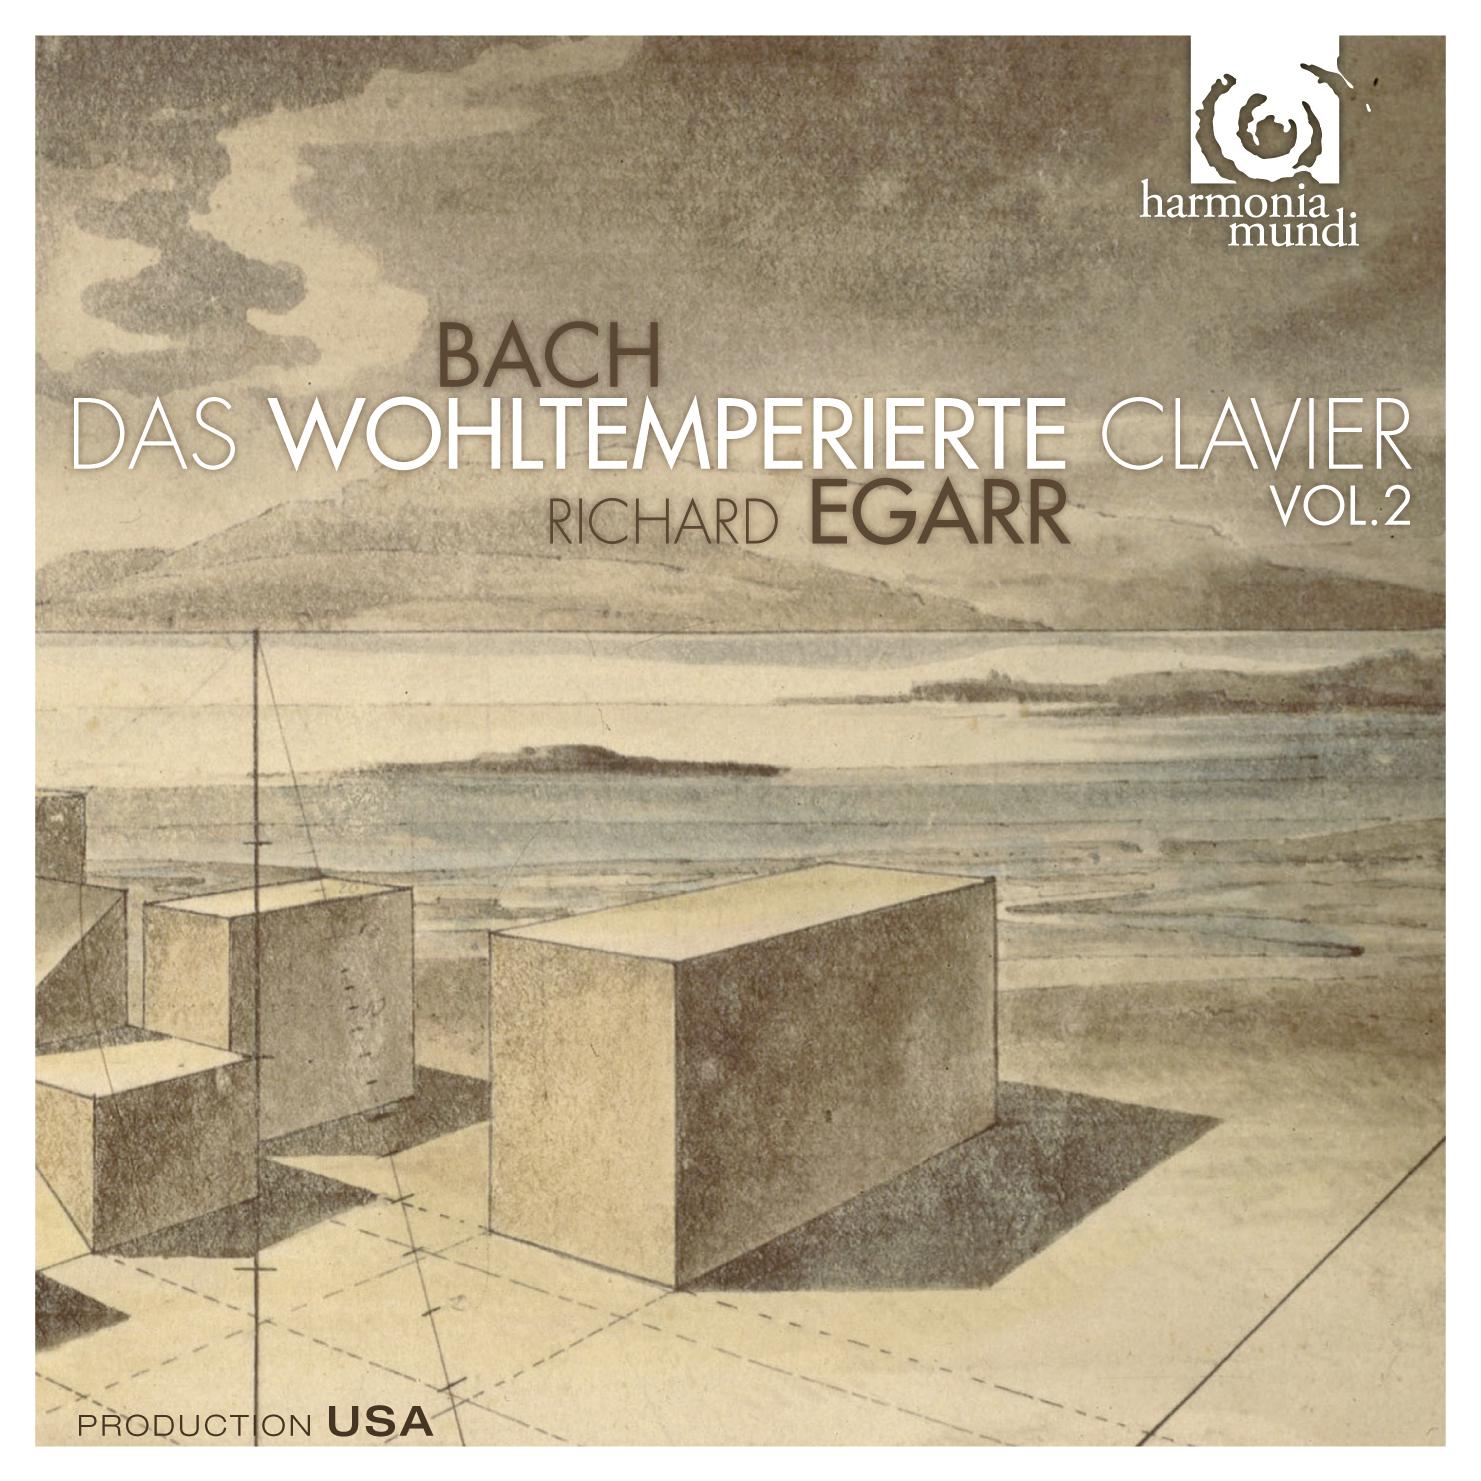 Well-Tempered Clavier, Book II, BWV 870-893: Prelude IV in C-Sharp Minor, BWV 873